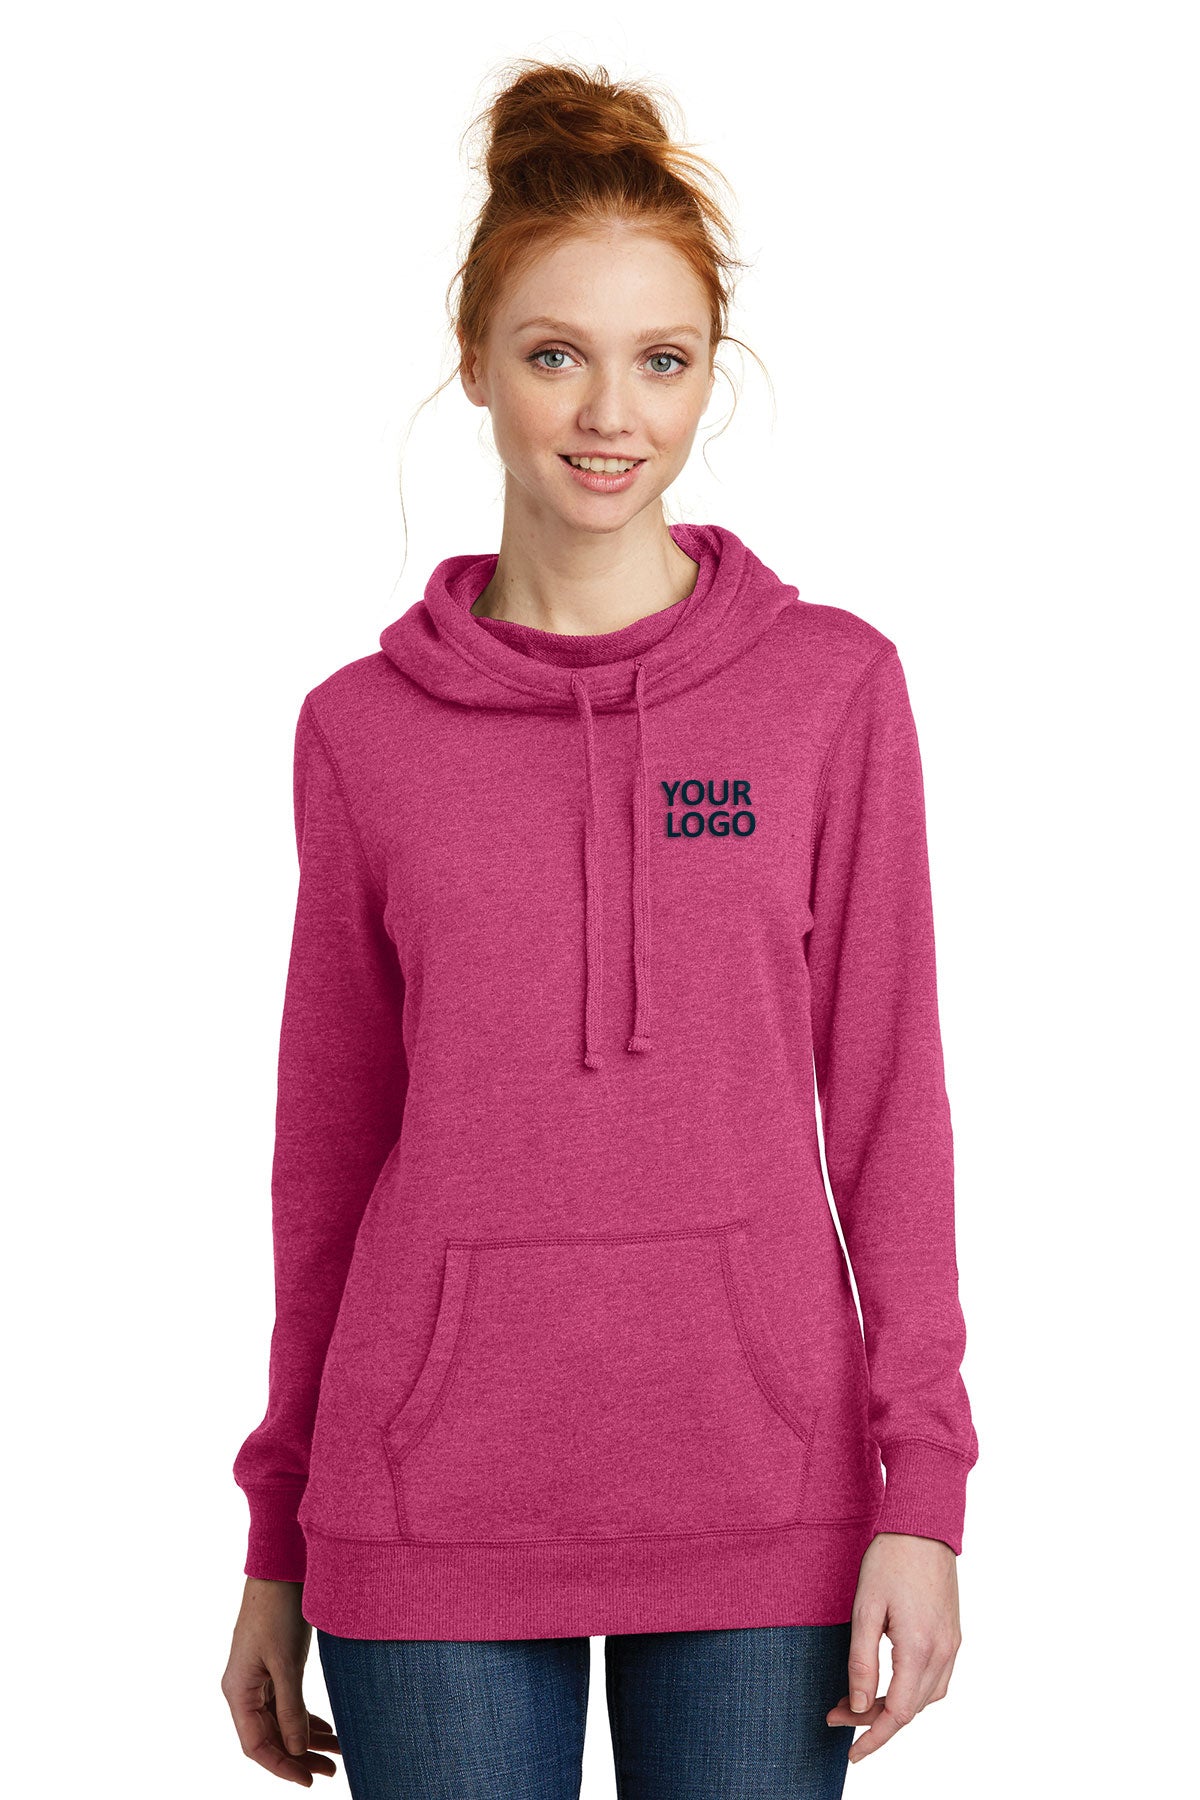 district made heathered pink azalea dm493 custom logo sweatshirts